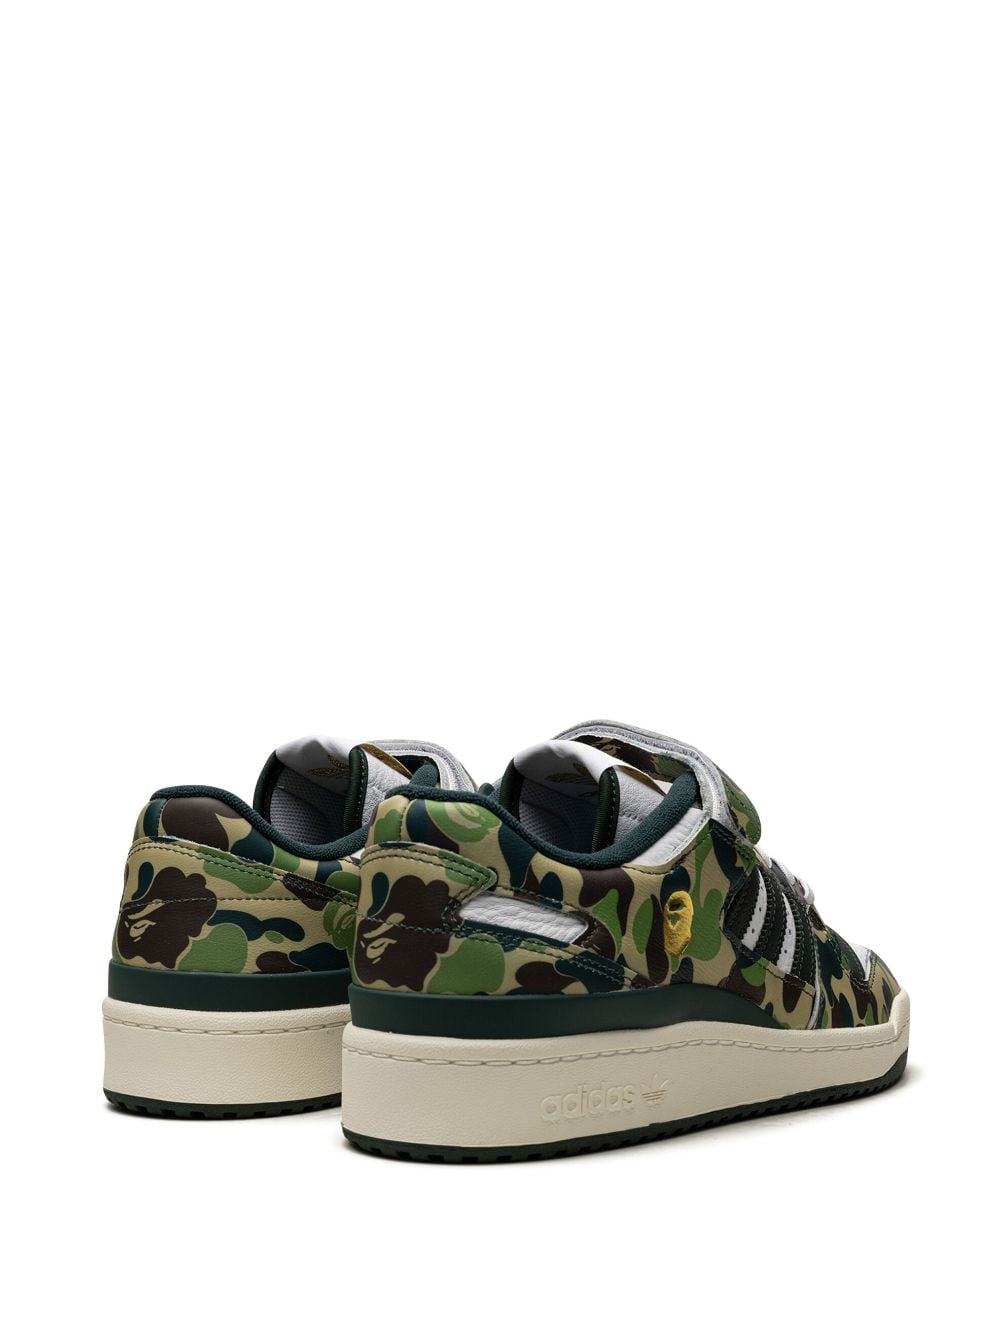 Shop Adidas Originals X Bape Forum 84 Low "30th Anniversary Green Camo" Sneakers